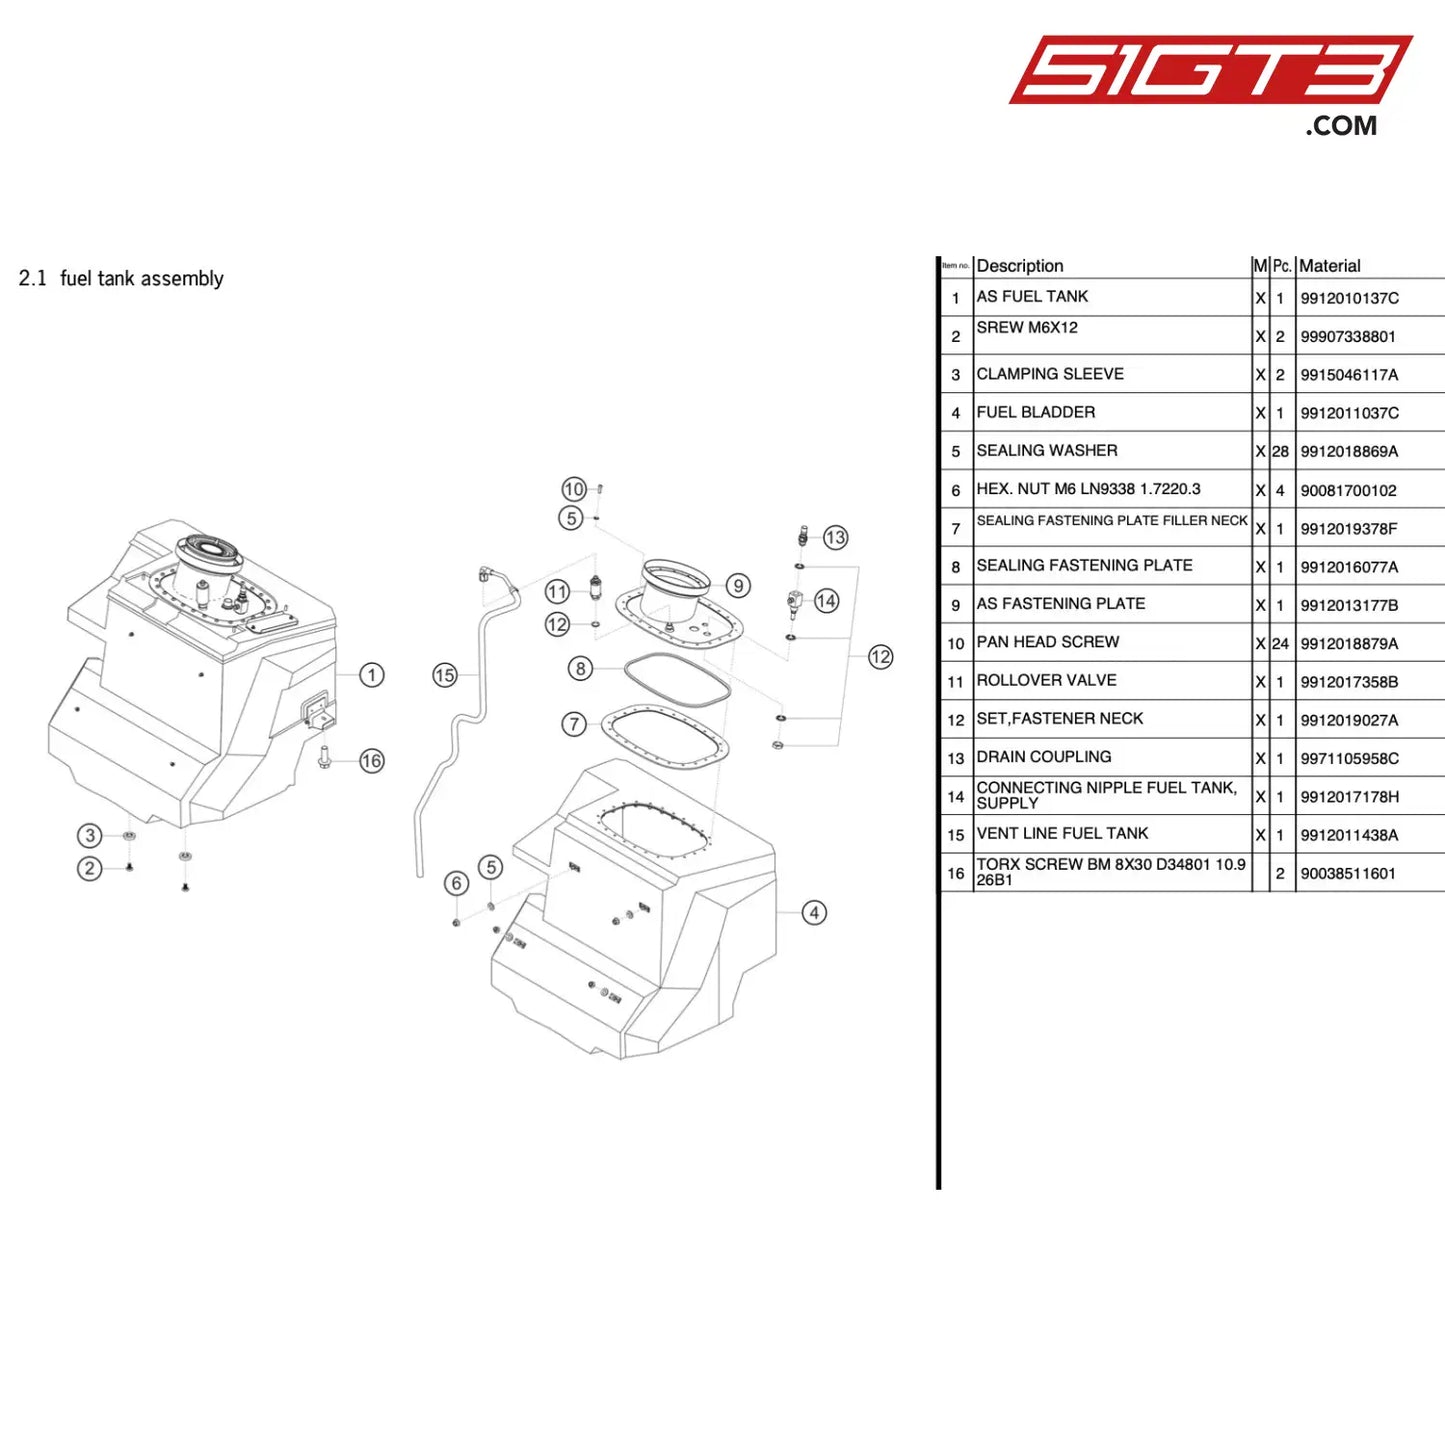 Sealing Fastening Plate Filler Neck - 9912019378F [Porsche 911 Gt3 R Type 991 (Gen 1)] Fuel Tank